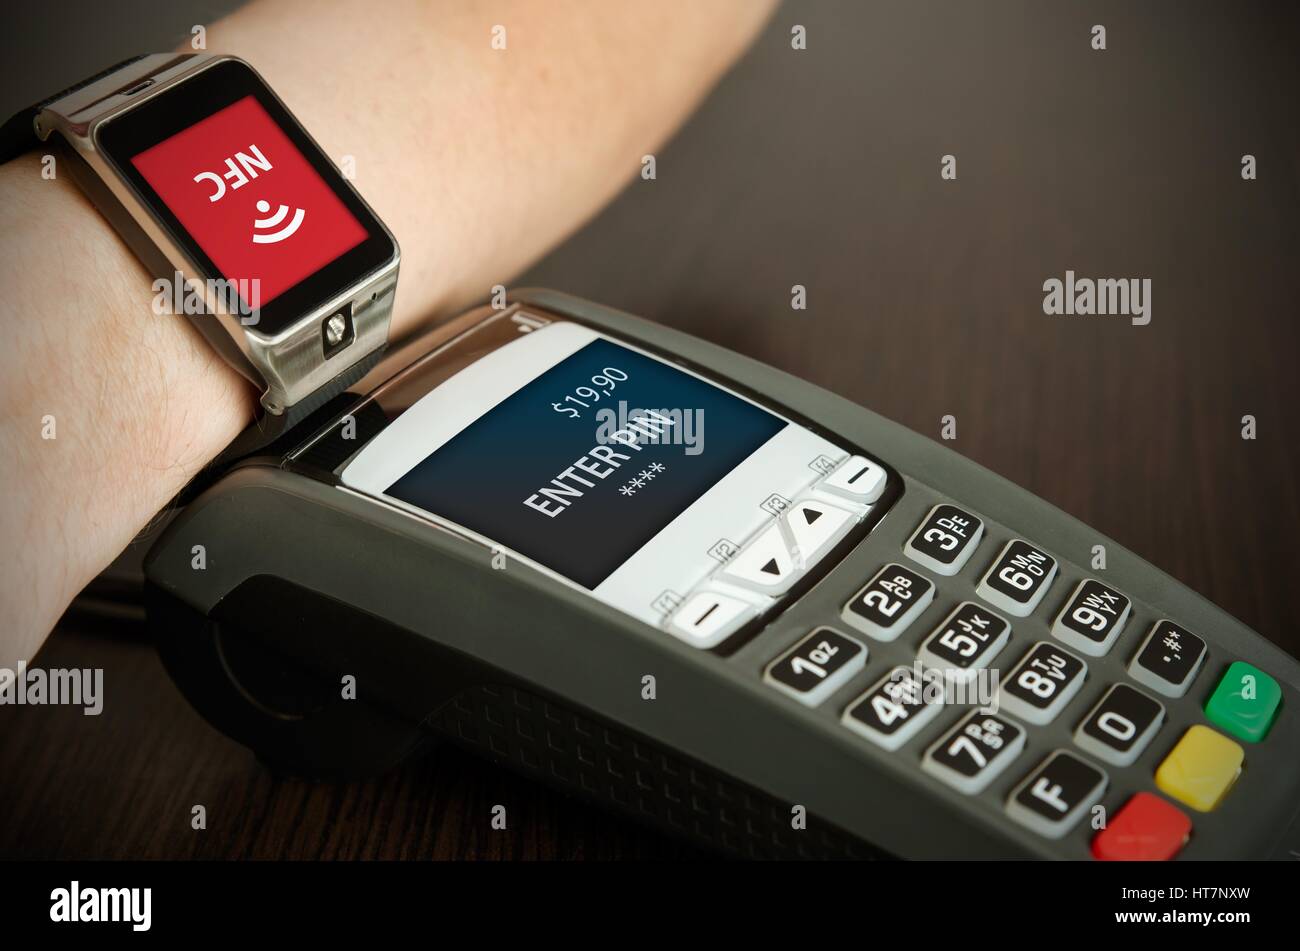 Man making payment through smartwatch via NFC contactless technology Stock Photo